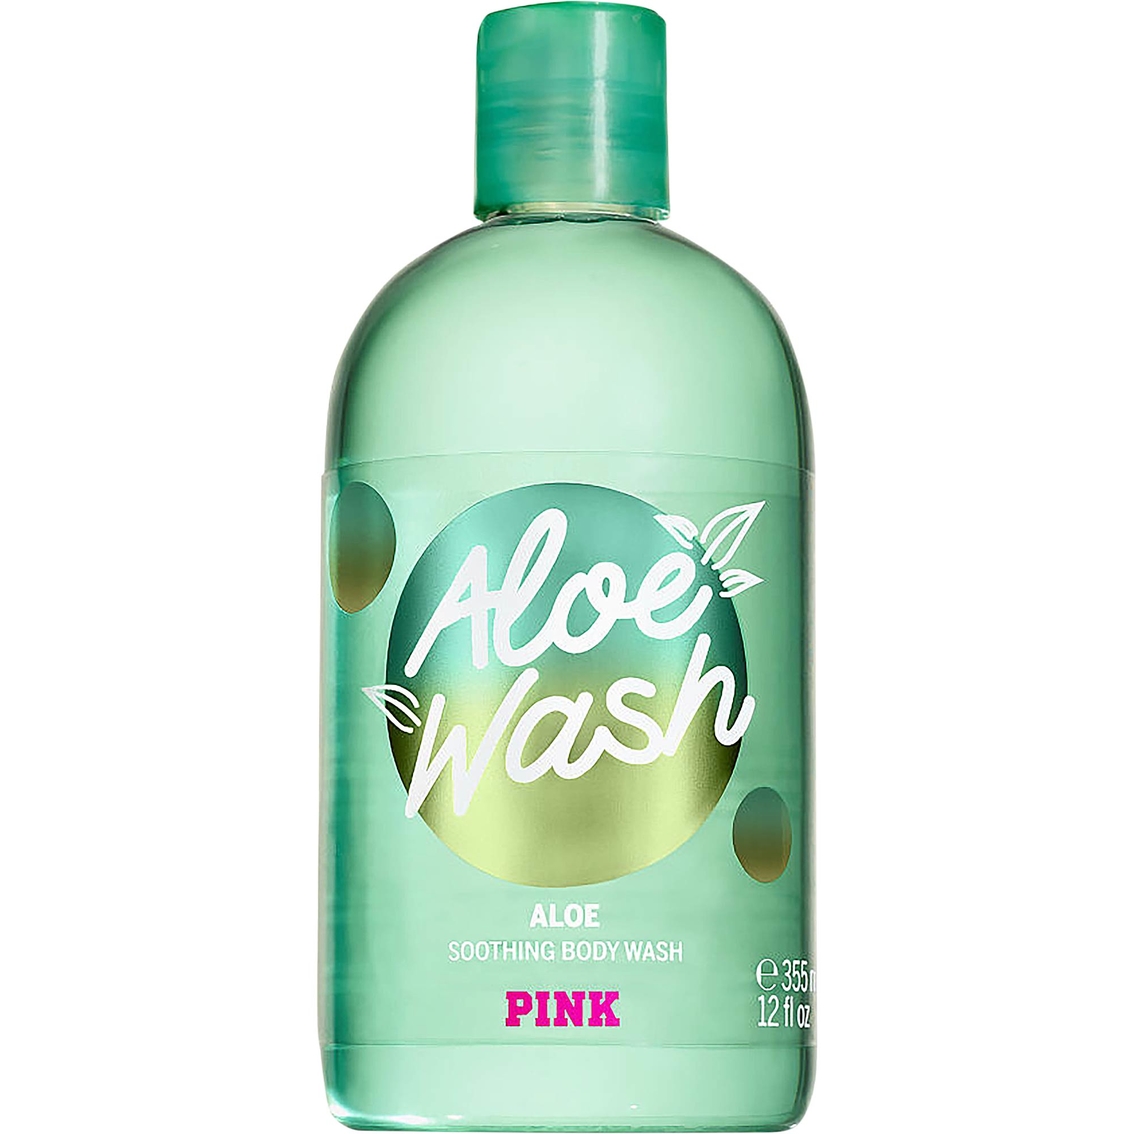 Victoria's Secret Pink Aloe Body Wash 12 Oz. | Body Beauty & Health | Shop The Exchange